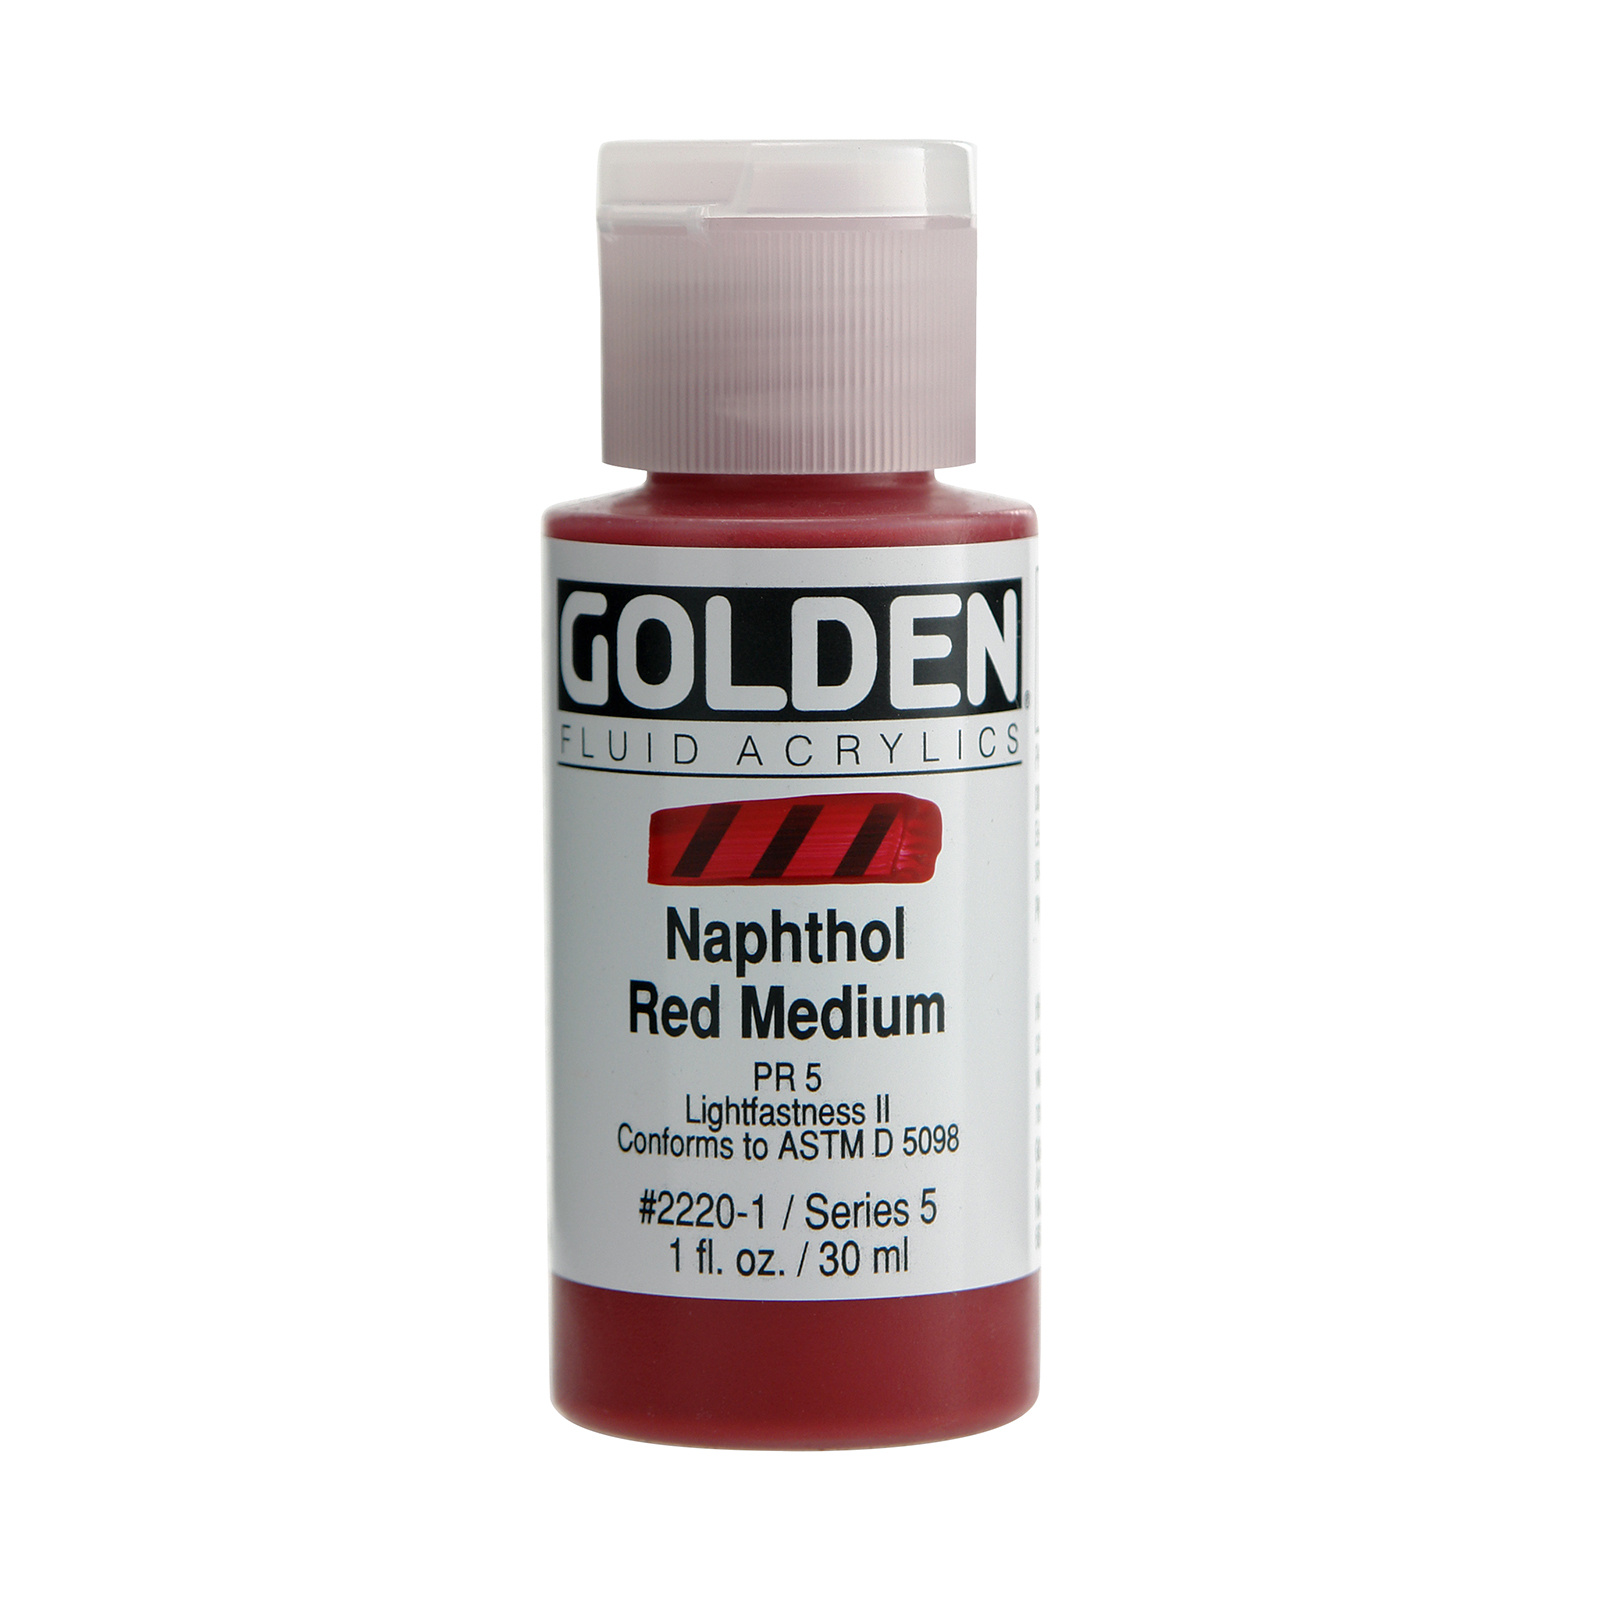 Golden Fluid Acrylics, 1 oz. Bottles, Naphthol Red Medium